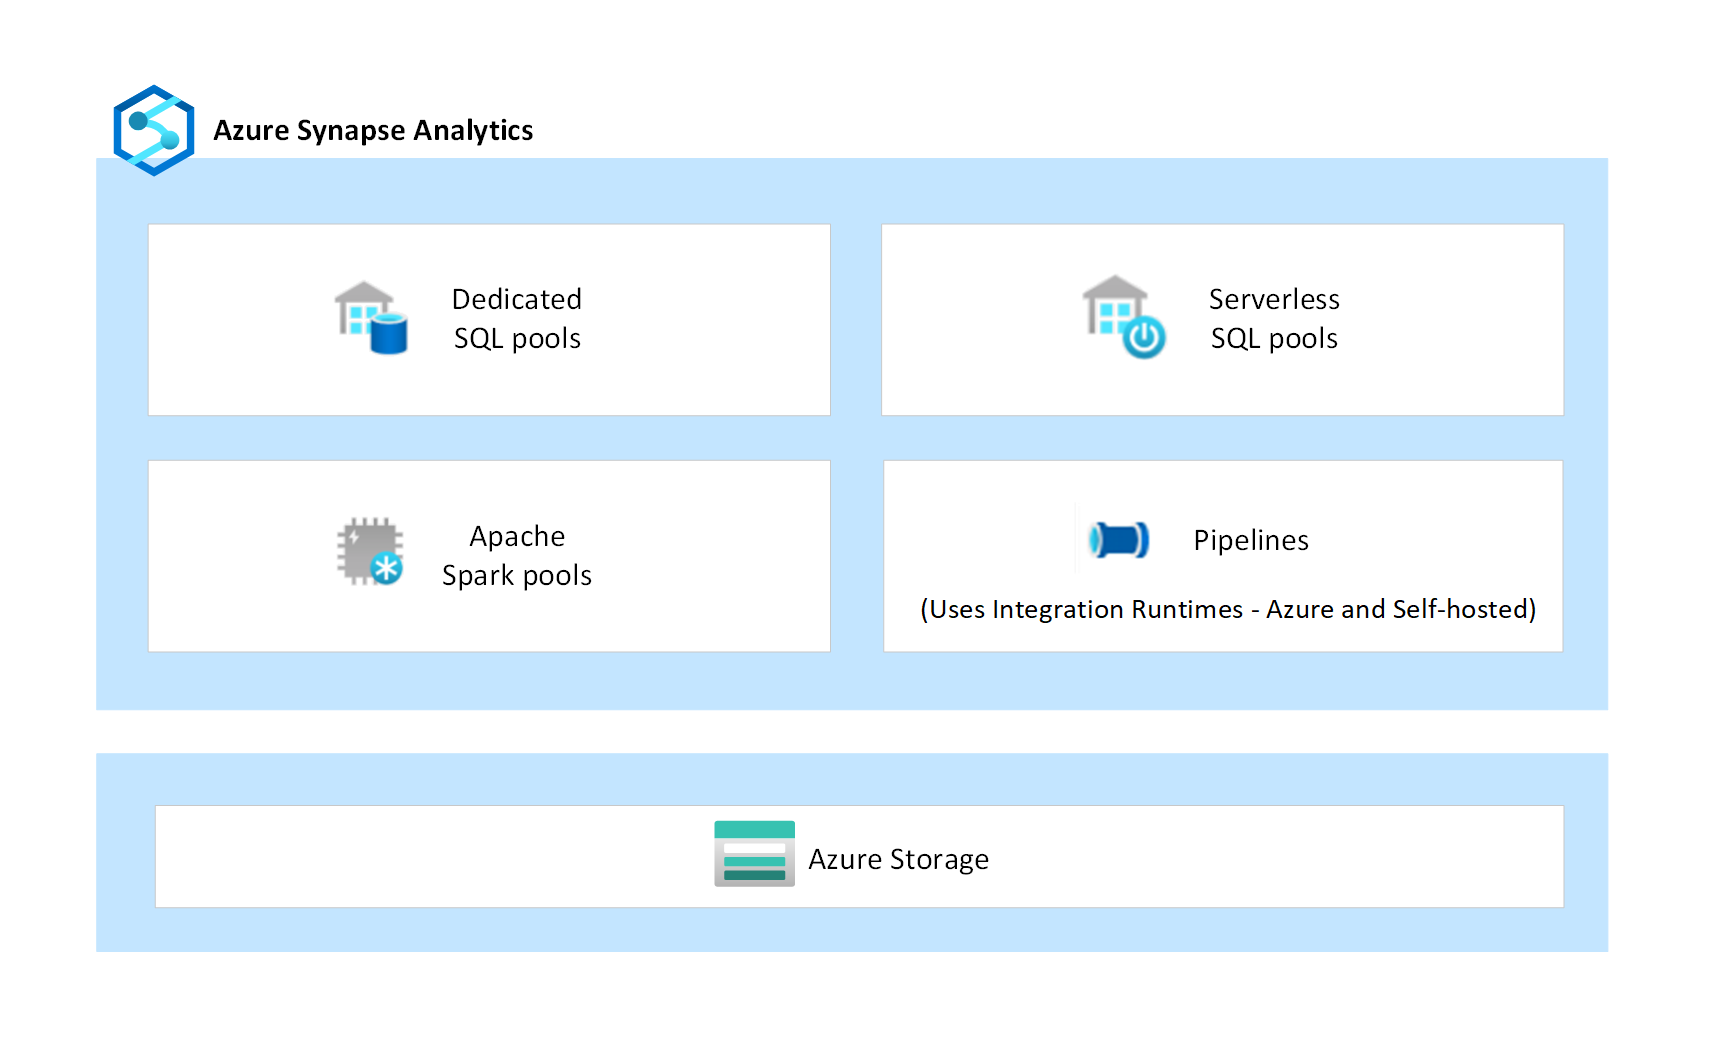 Azure Synapse 组件图，显示专用 SQL 池、无服务器 SQL 池、Apache Spark 池和管道。